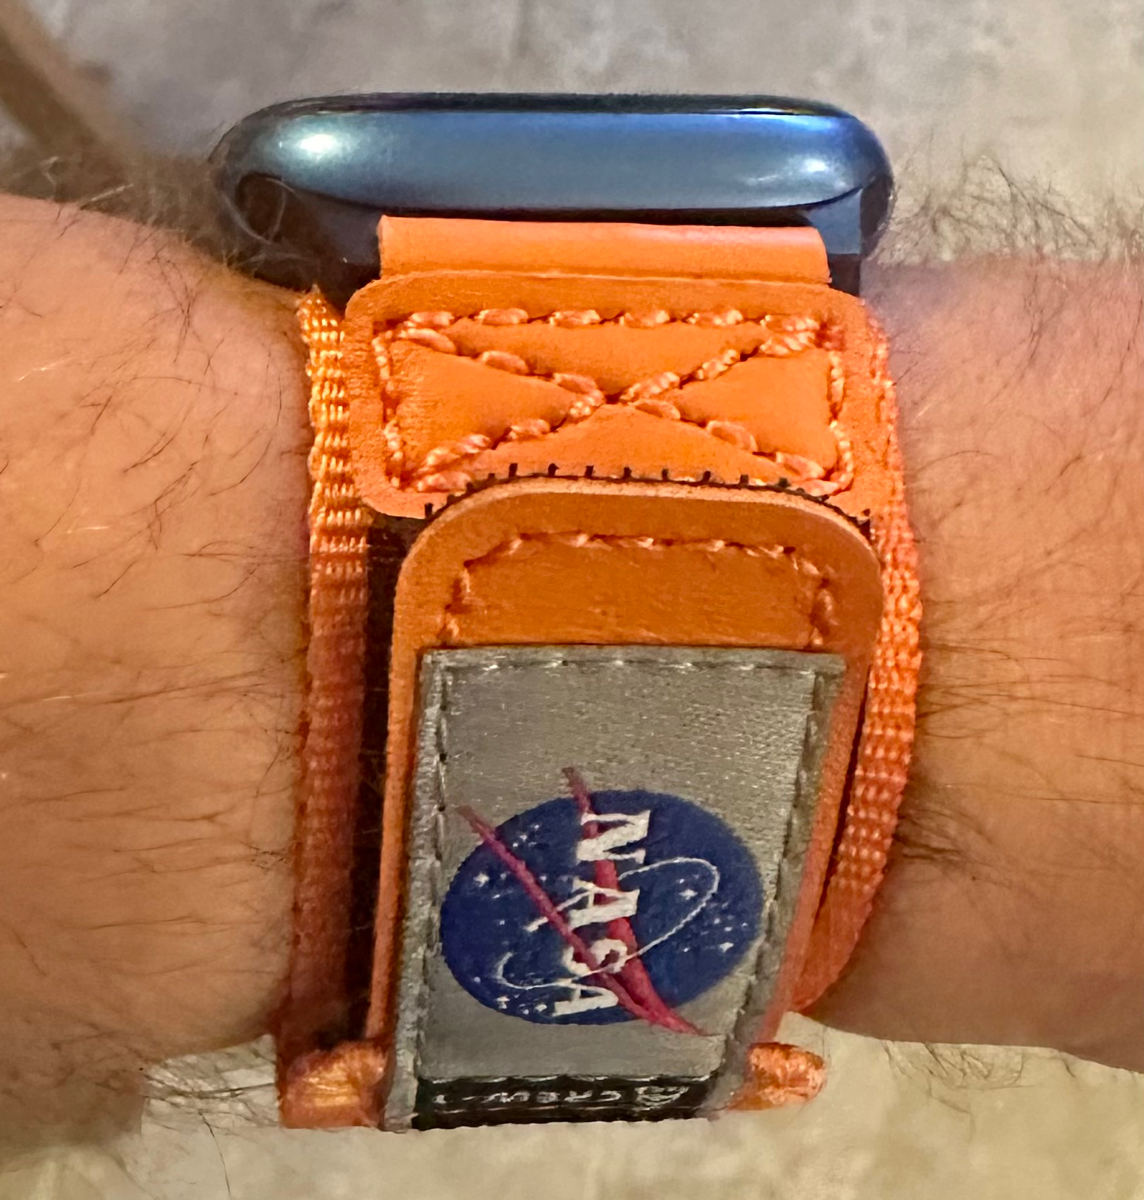 Orange NASA band from Mifa